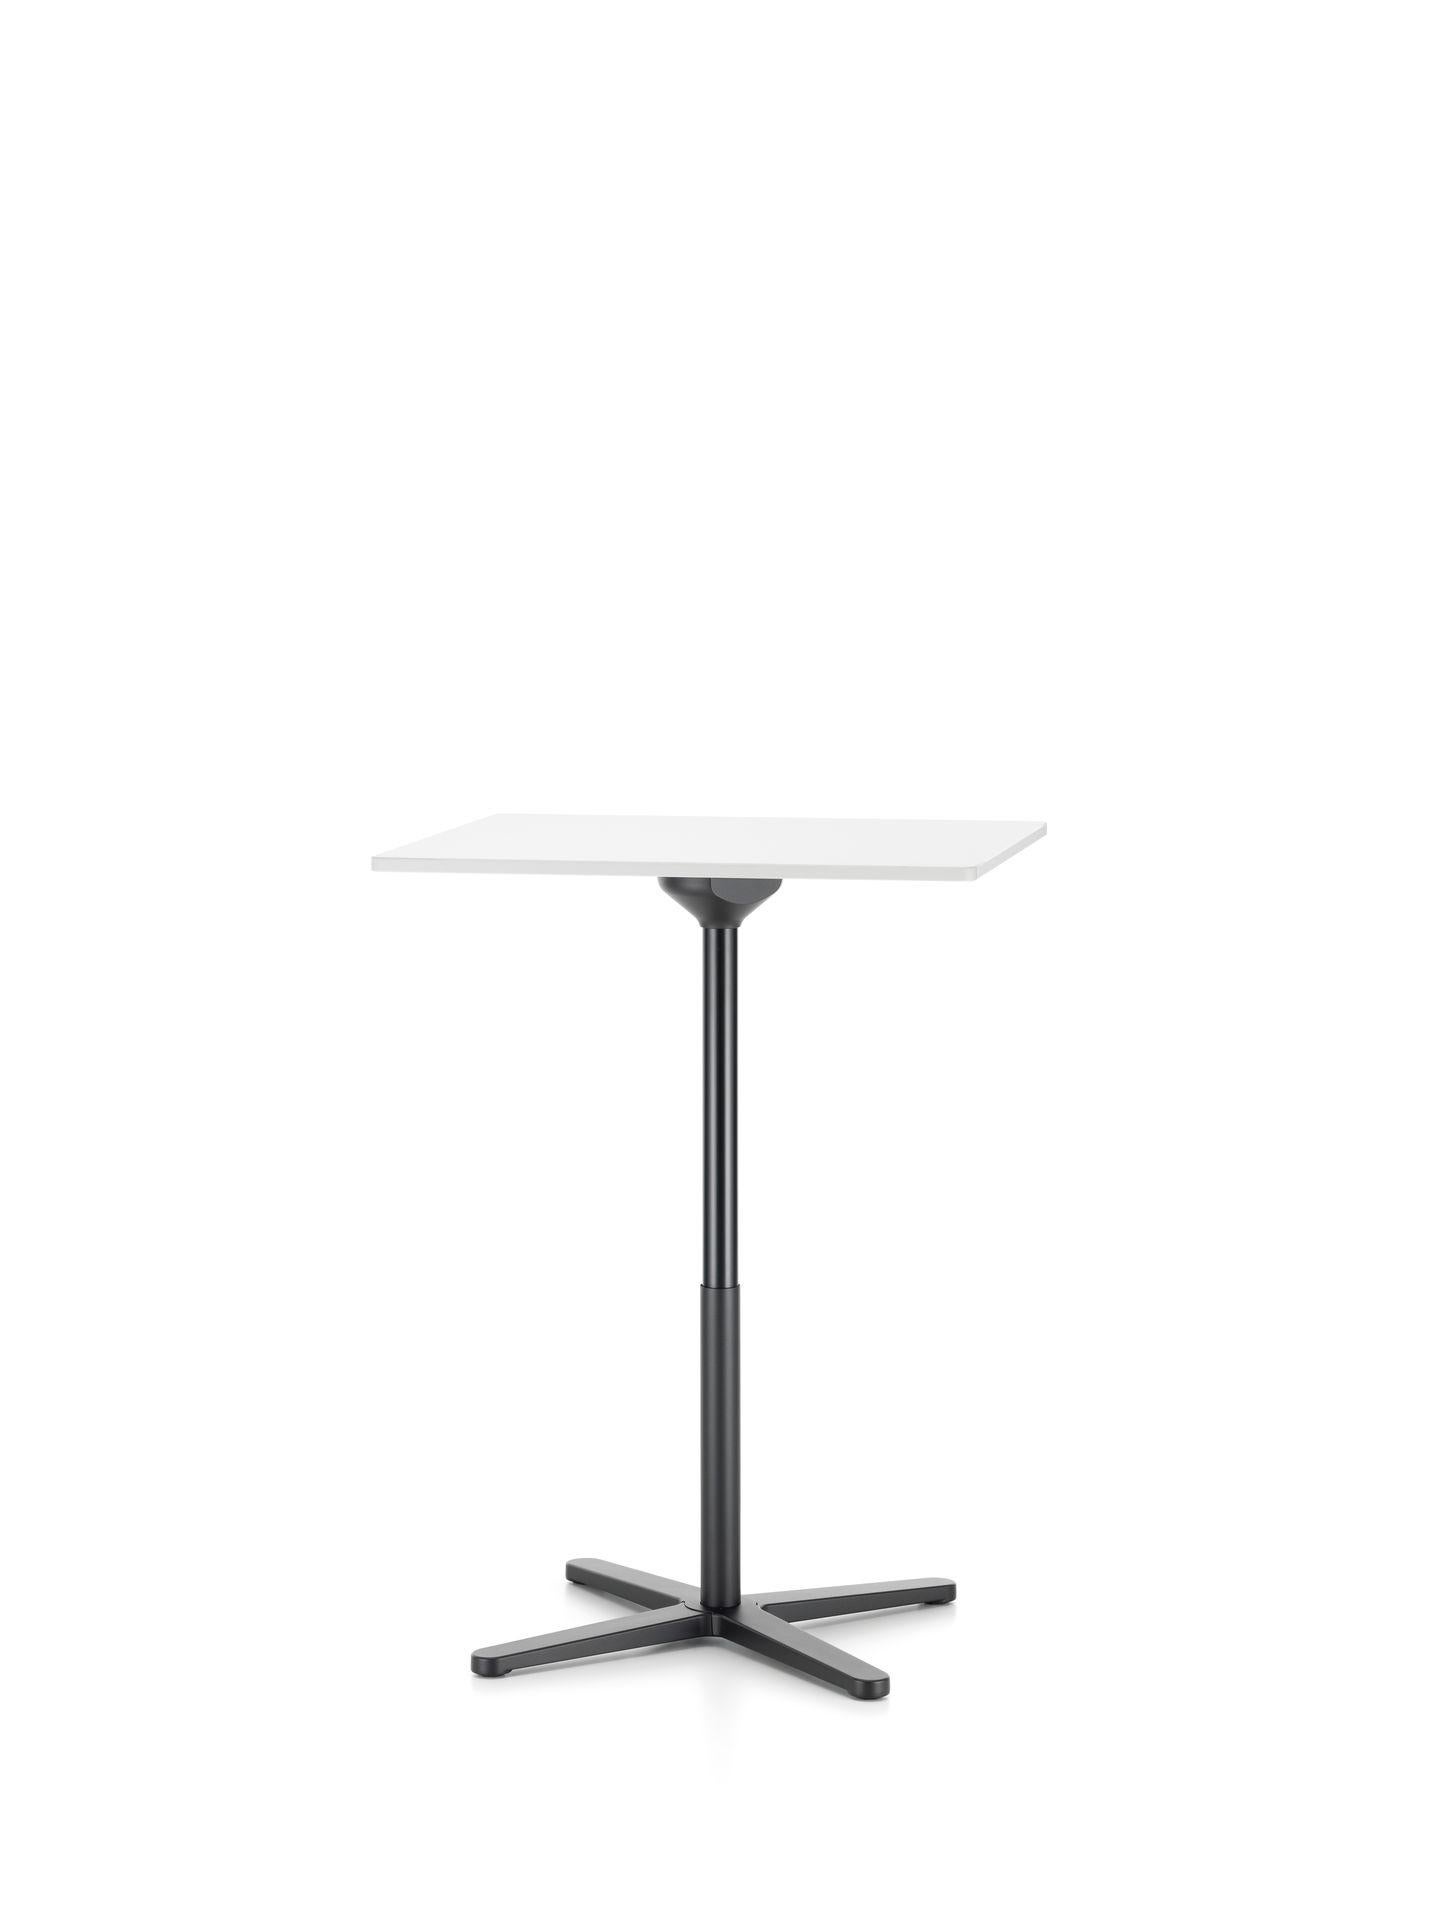 Swiss Jasper Morrison Super Fold Table High, White Melamine and Steel by Vitra